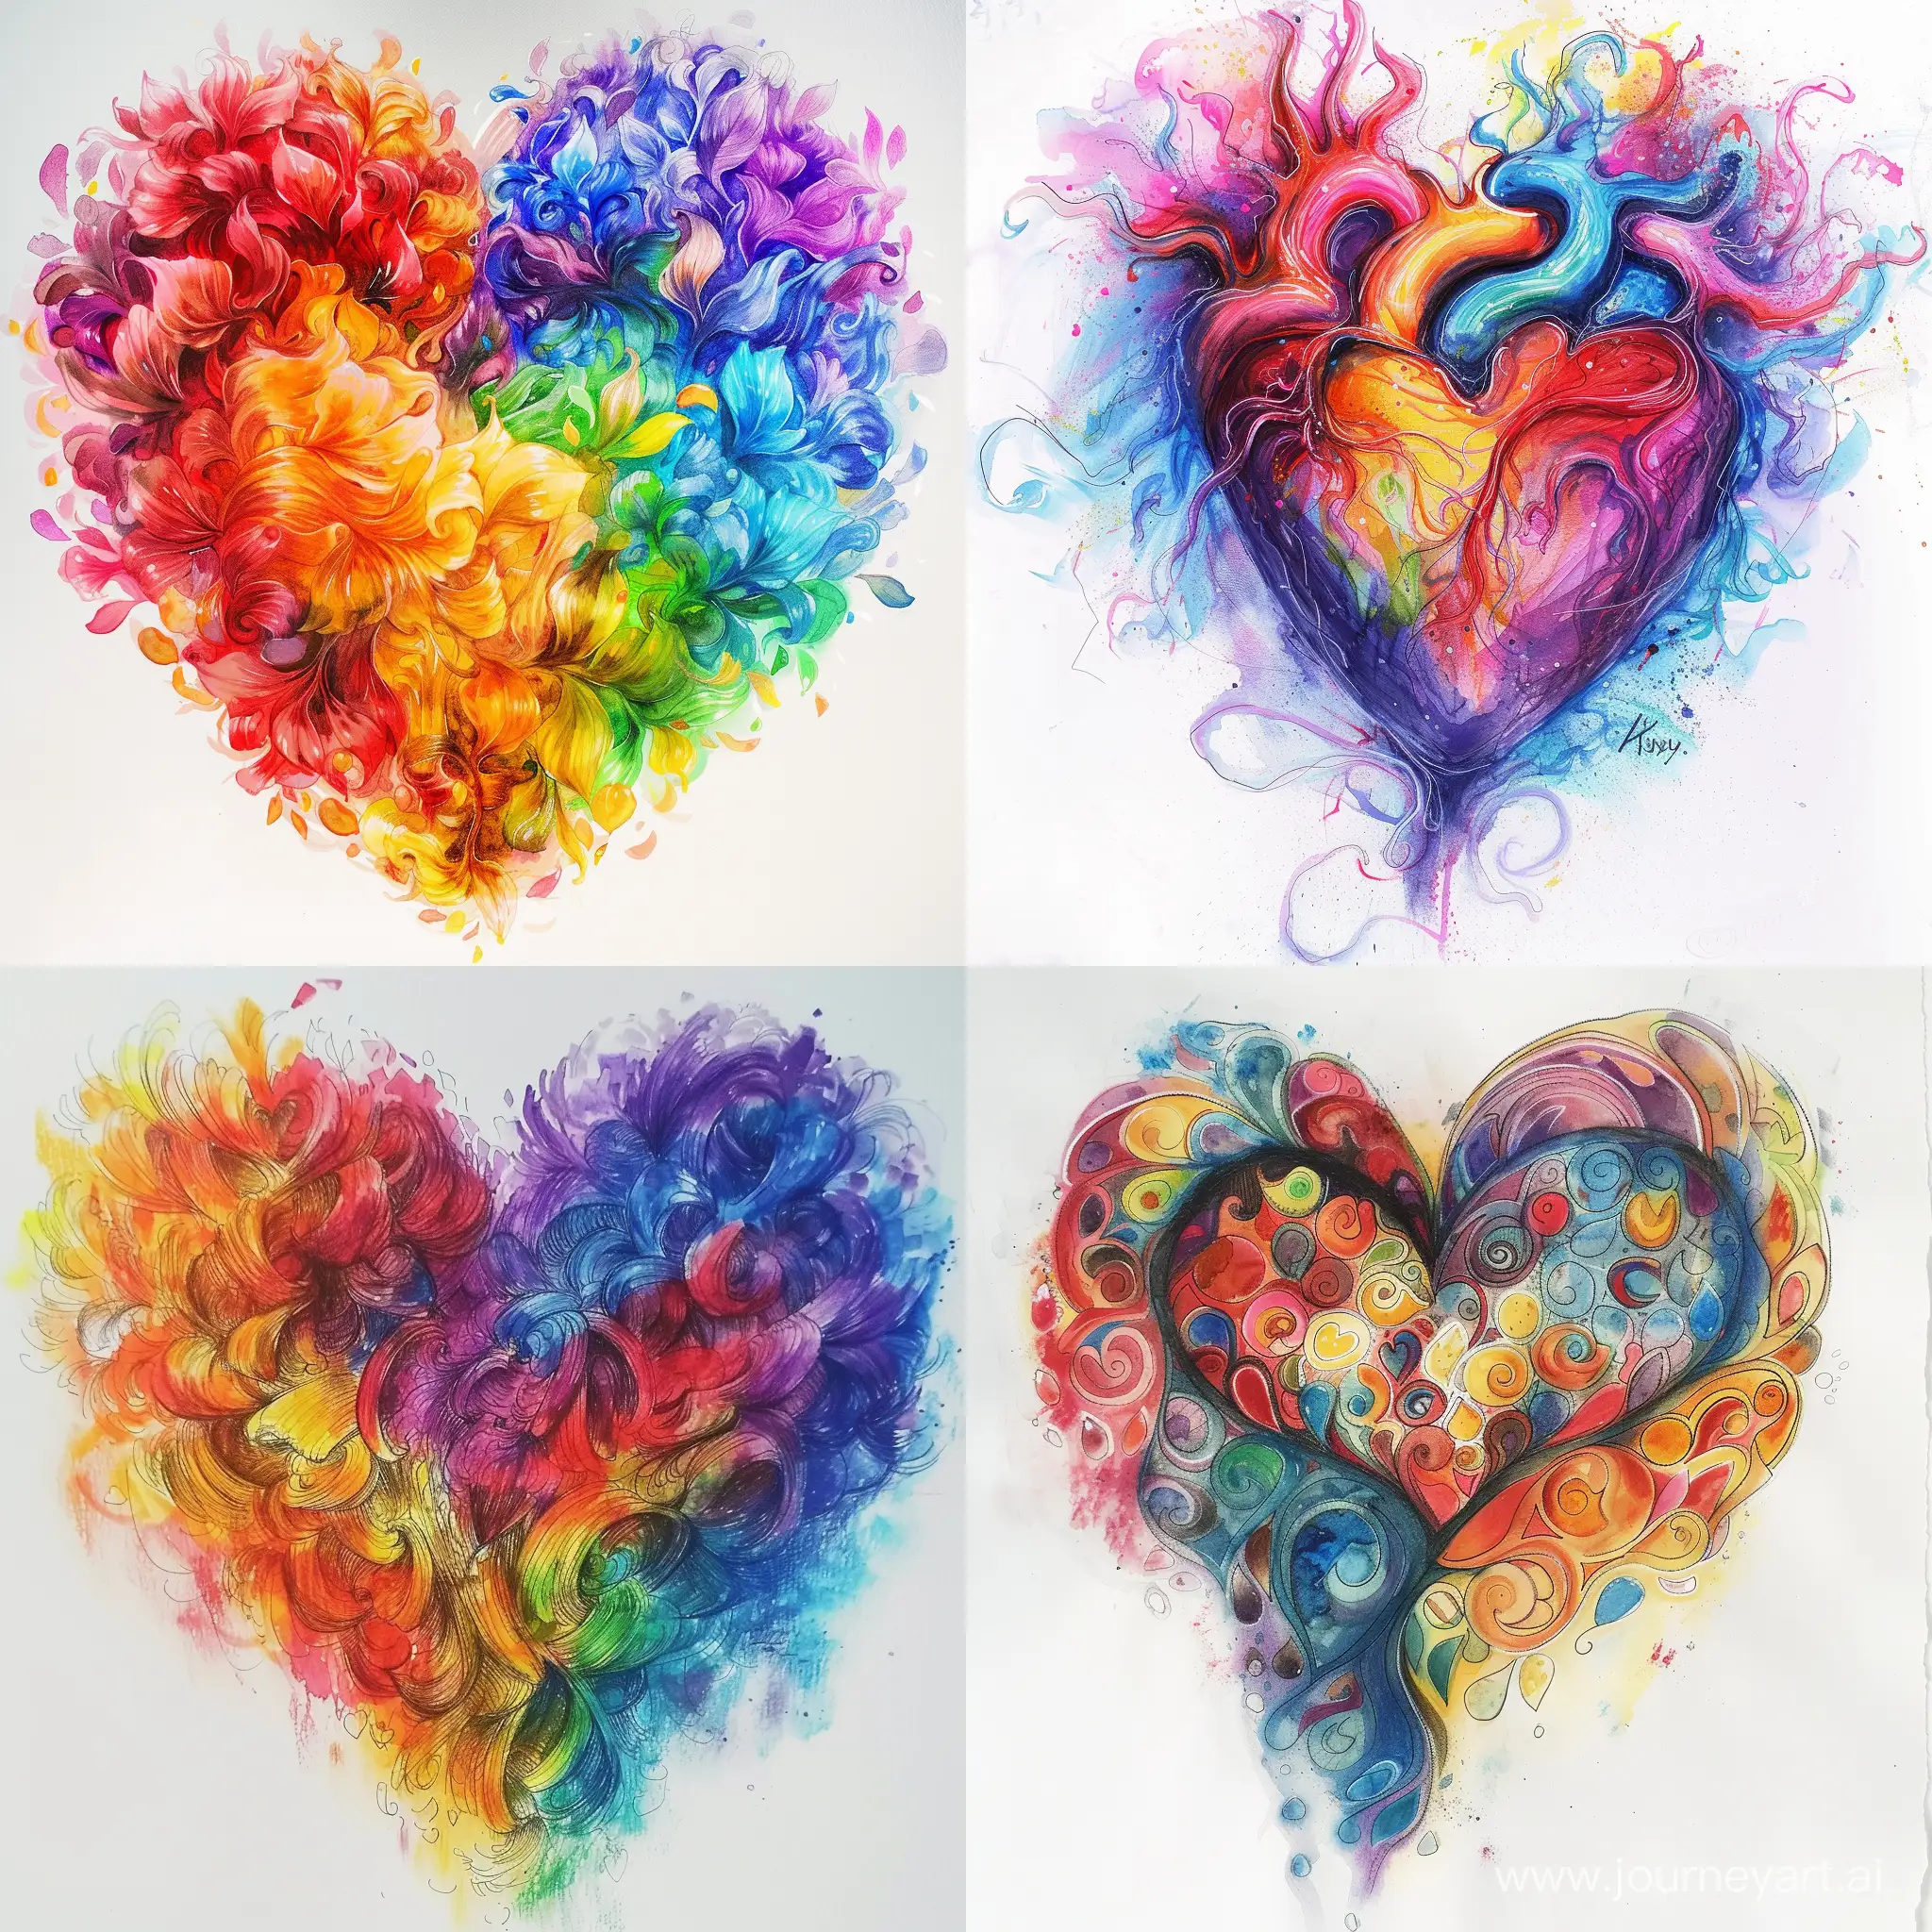 Vibrant-Expression-of-Yushkas-Heart-Through-Diverse-Colors